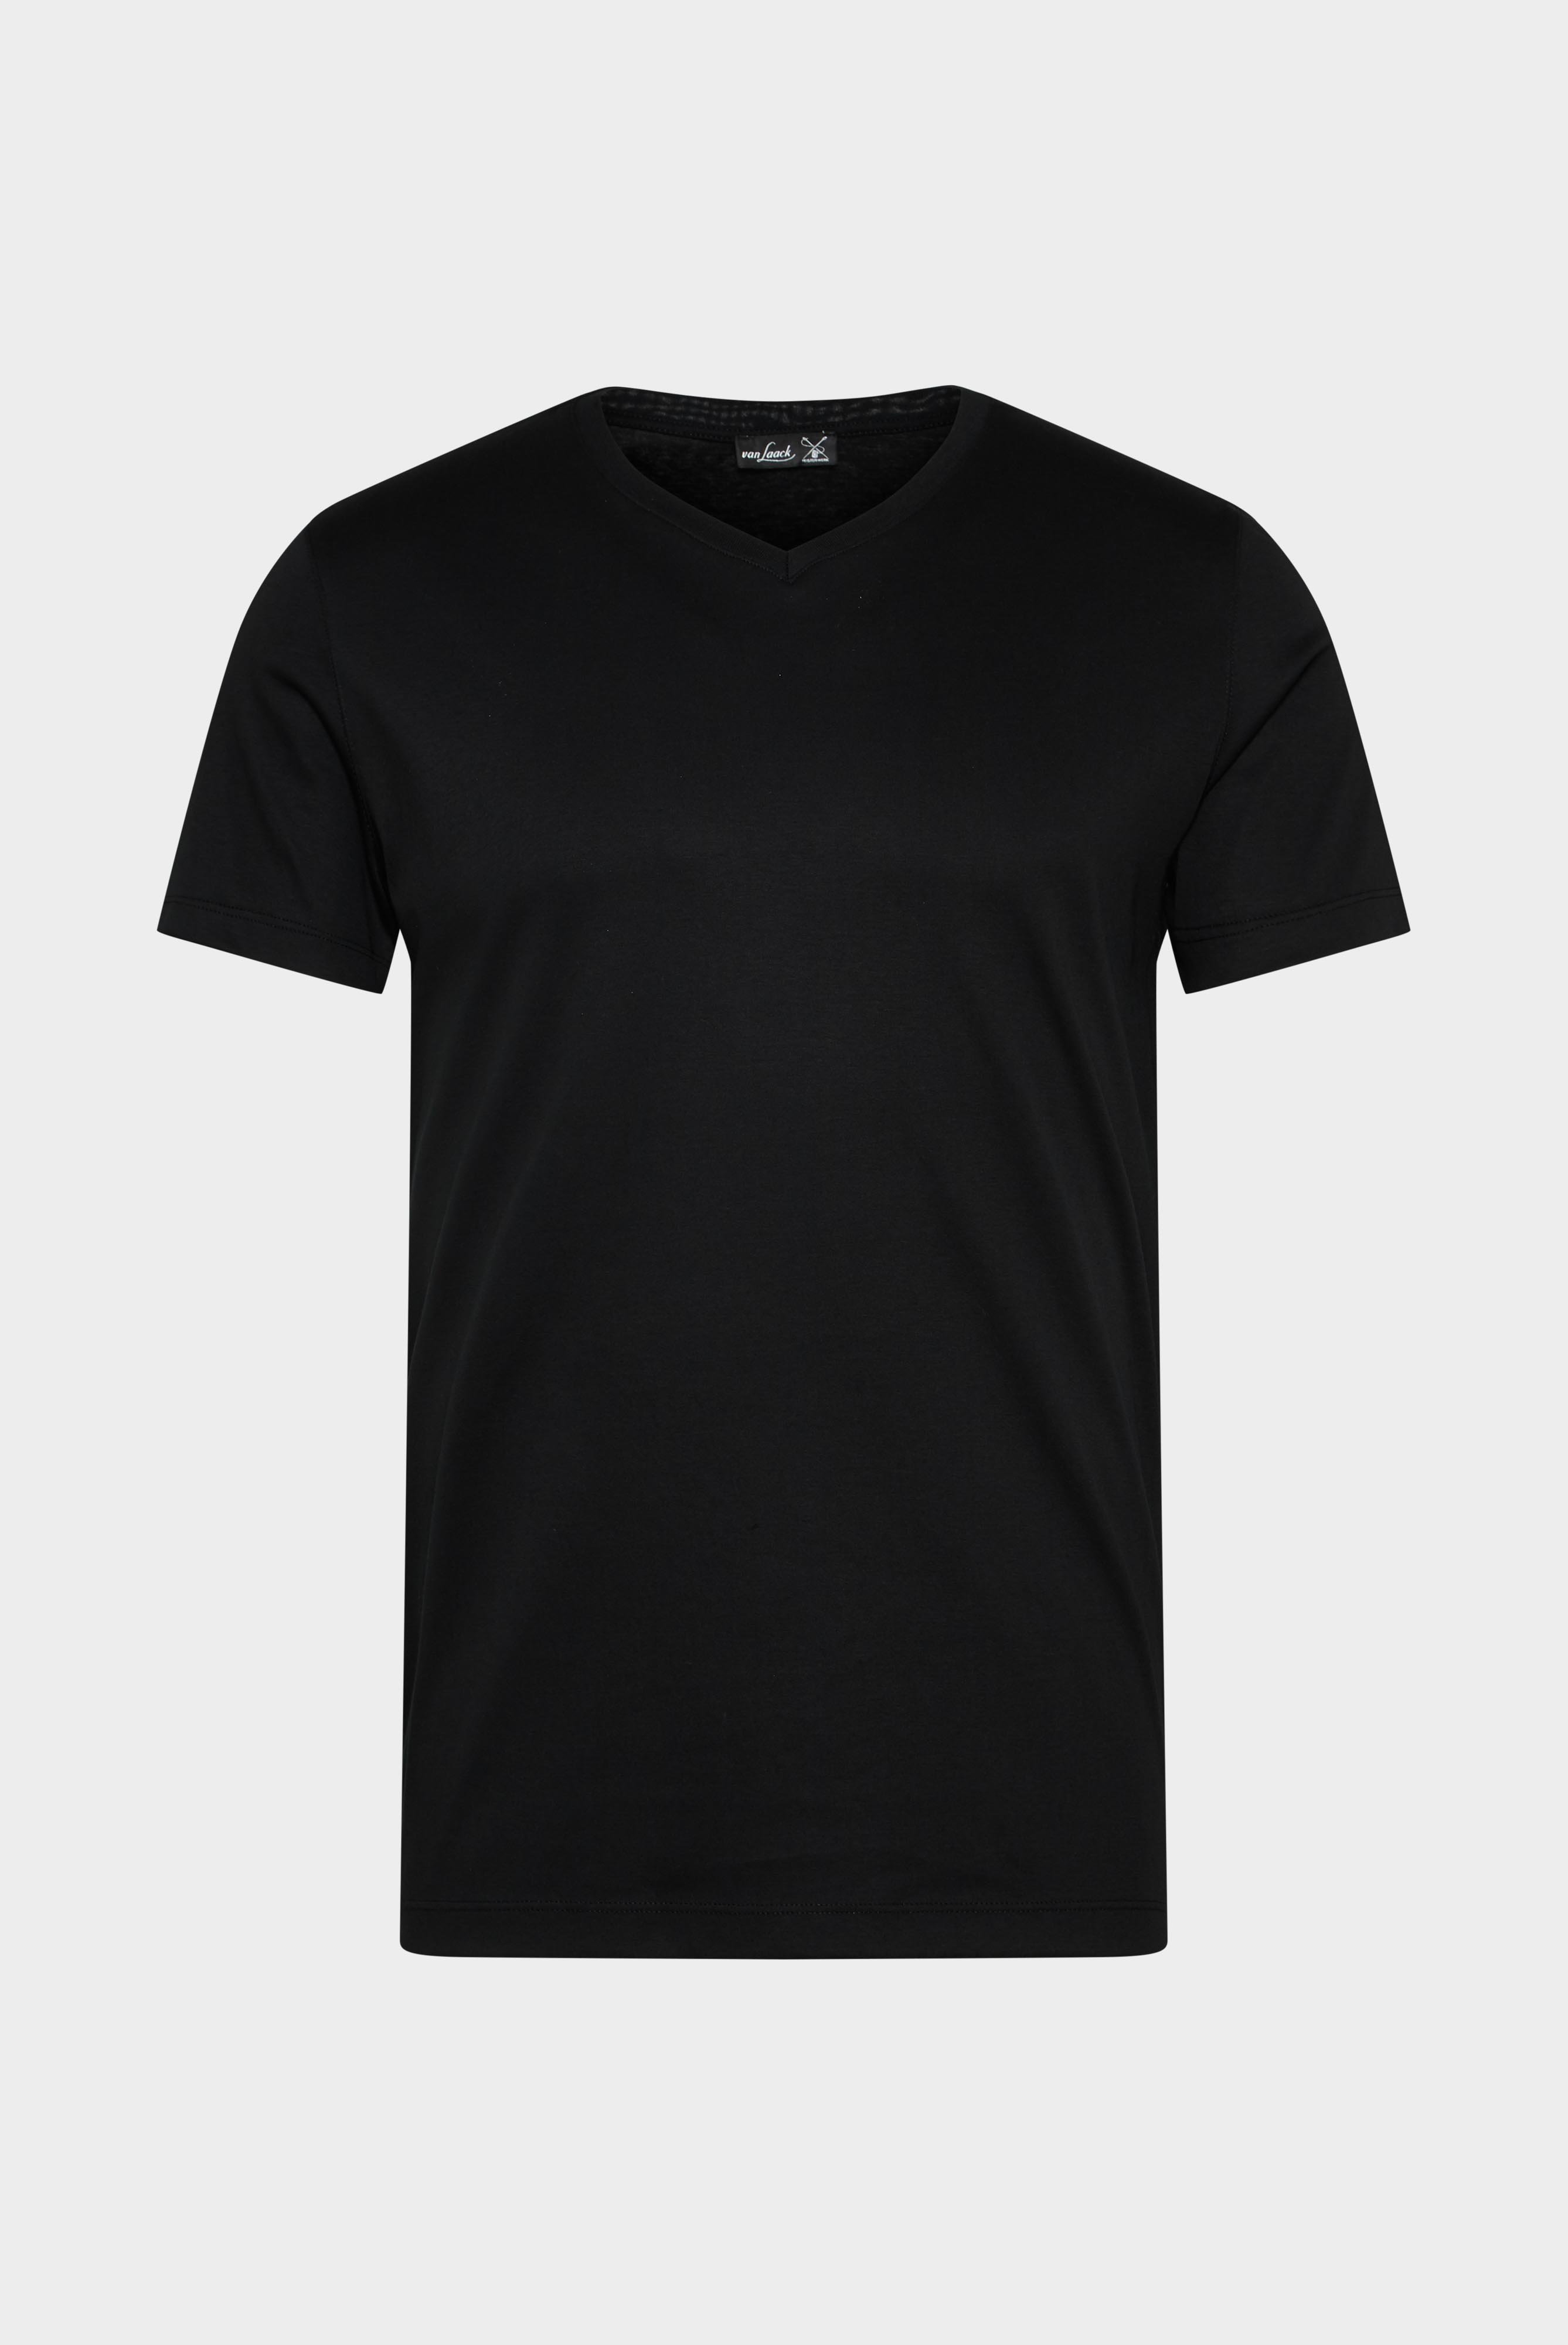 T-Shirts+Swiss Cotton Jersey V-Neck T-Shirt+20.1715.UX.180031.099.XL